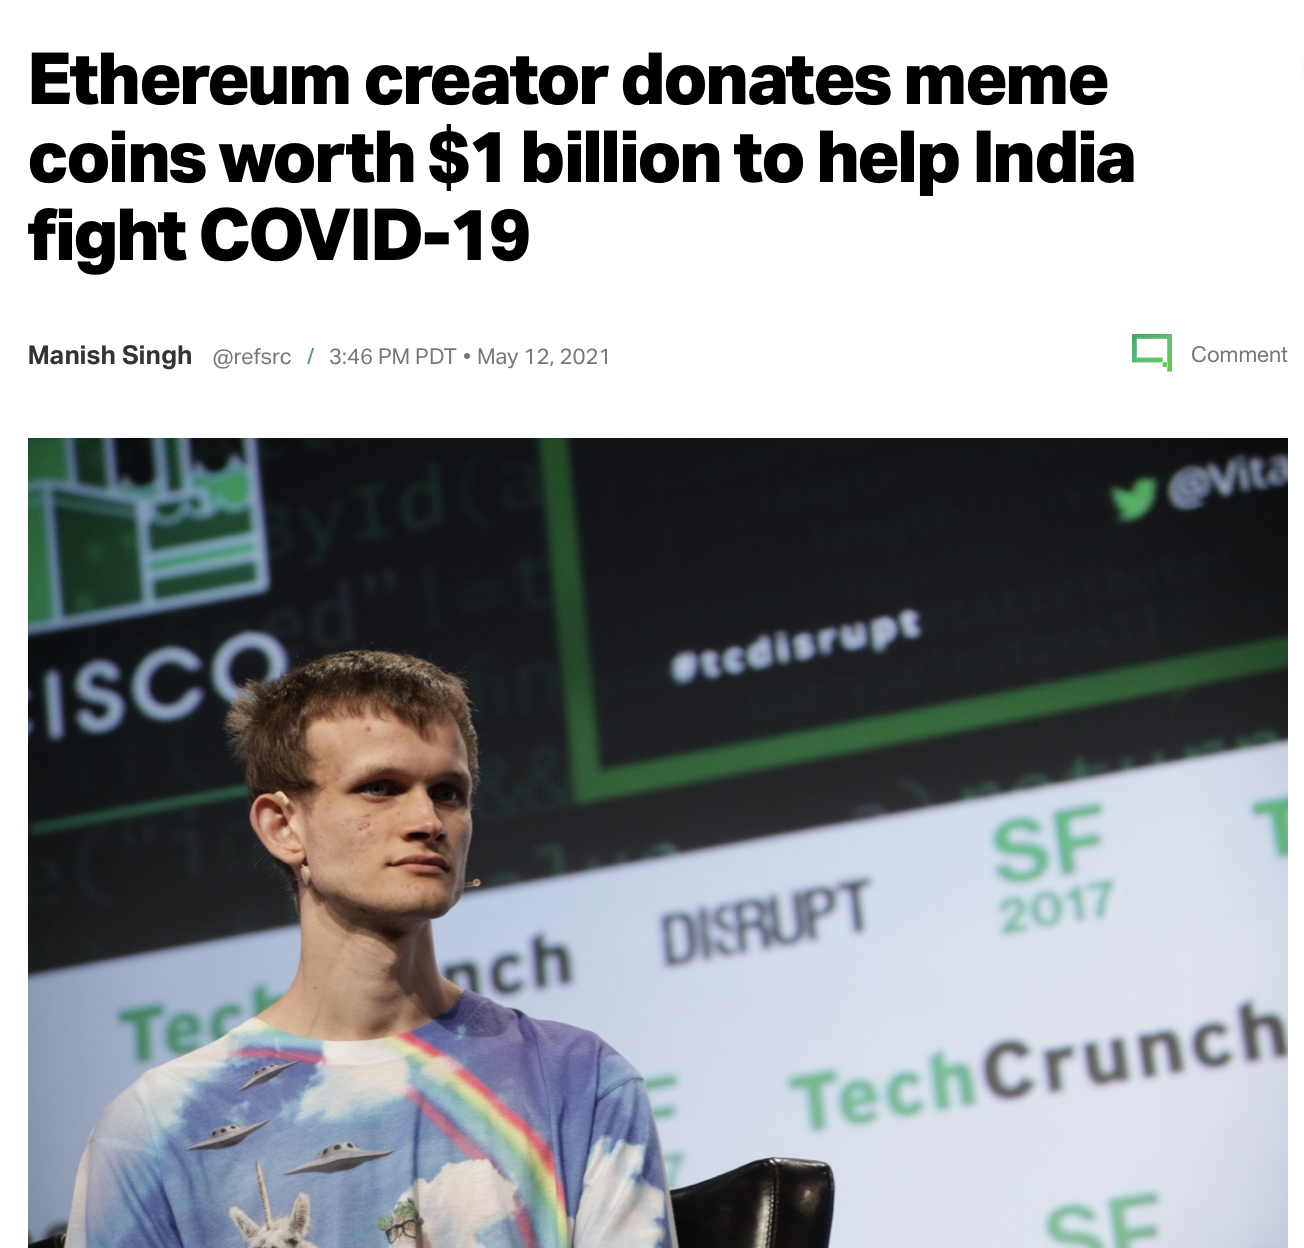 Tech Crunch 对此事的报道，2021 年。/以太坊创始人捐赠价值 10 亿美金 Meme 币，以帮助印度抗击新冠肺炎。